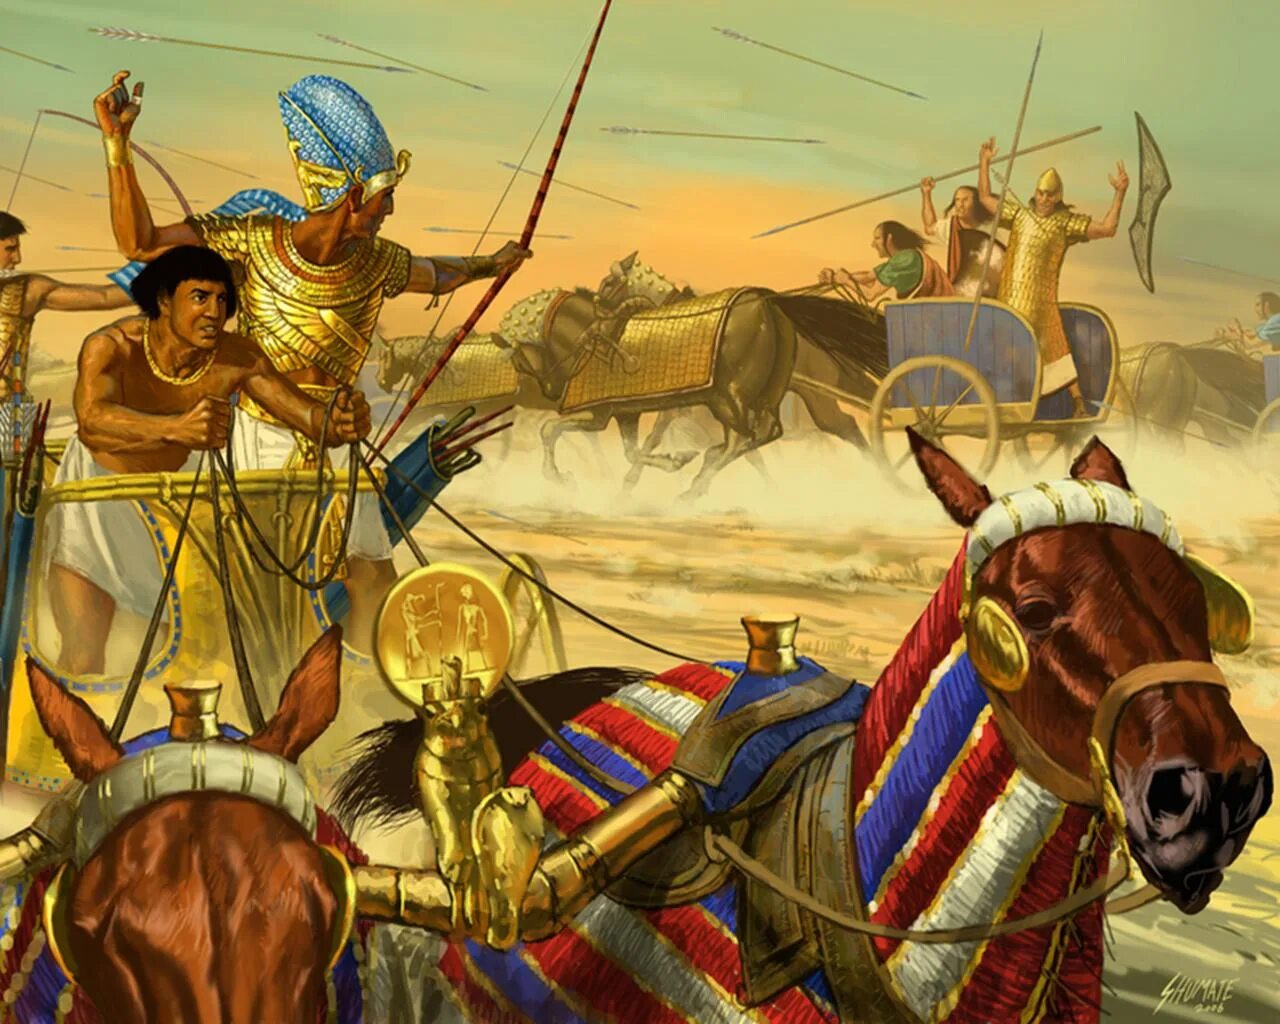 РАМЗЕС 2 битва при Кадеше. Битва при Кадеше древний Египет. Битвы Египта и хеттов. Рамсес 2 в битве при Кадеше.